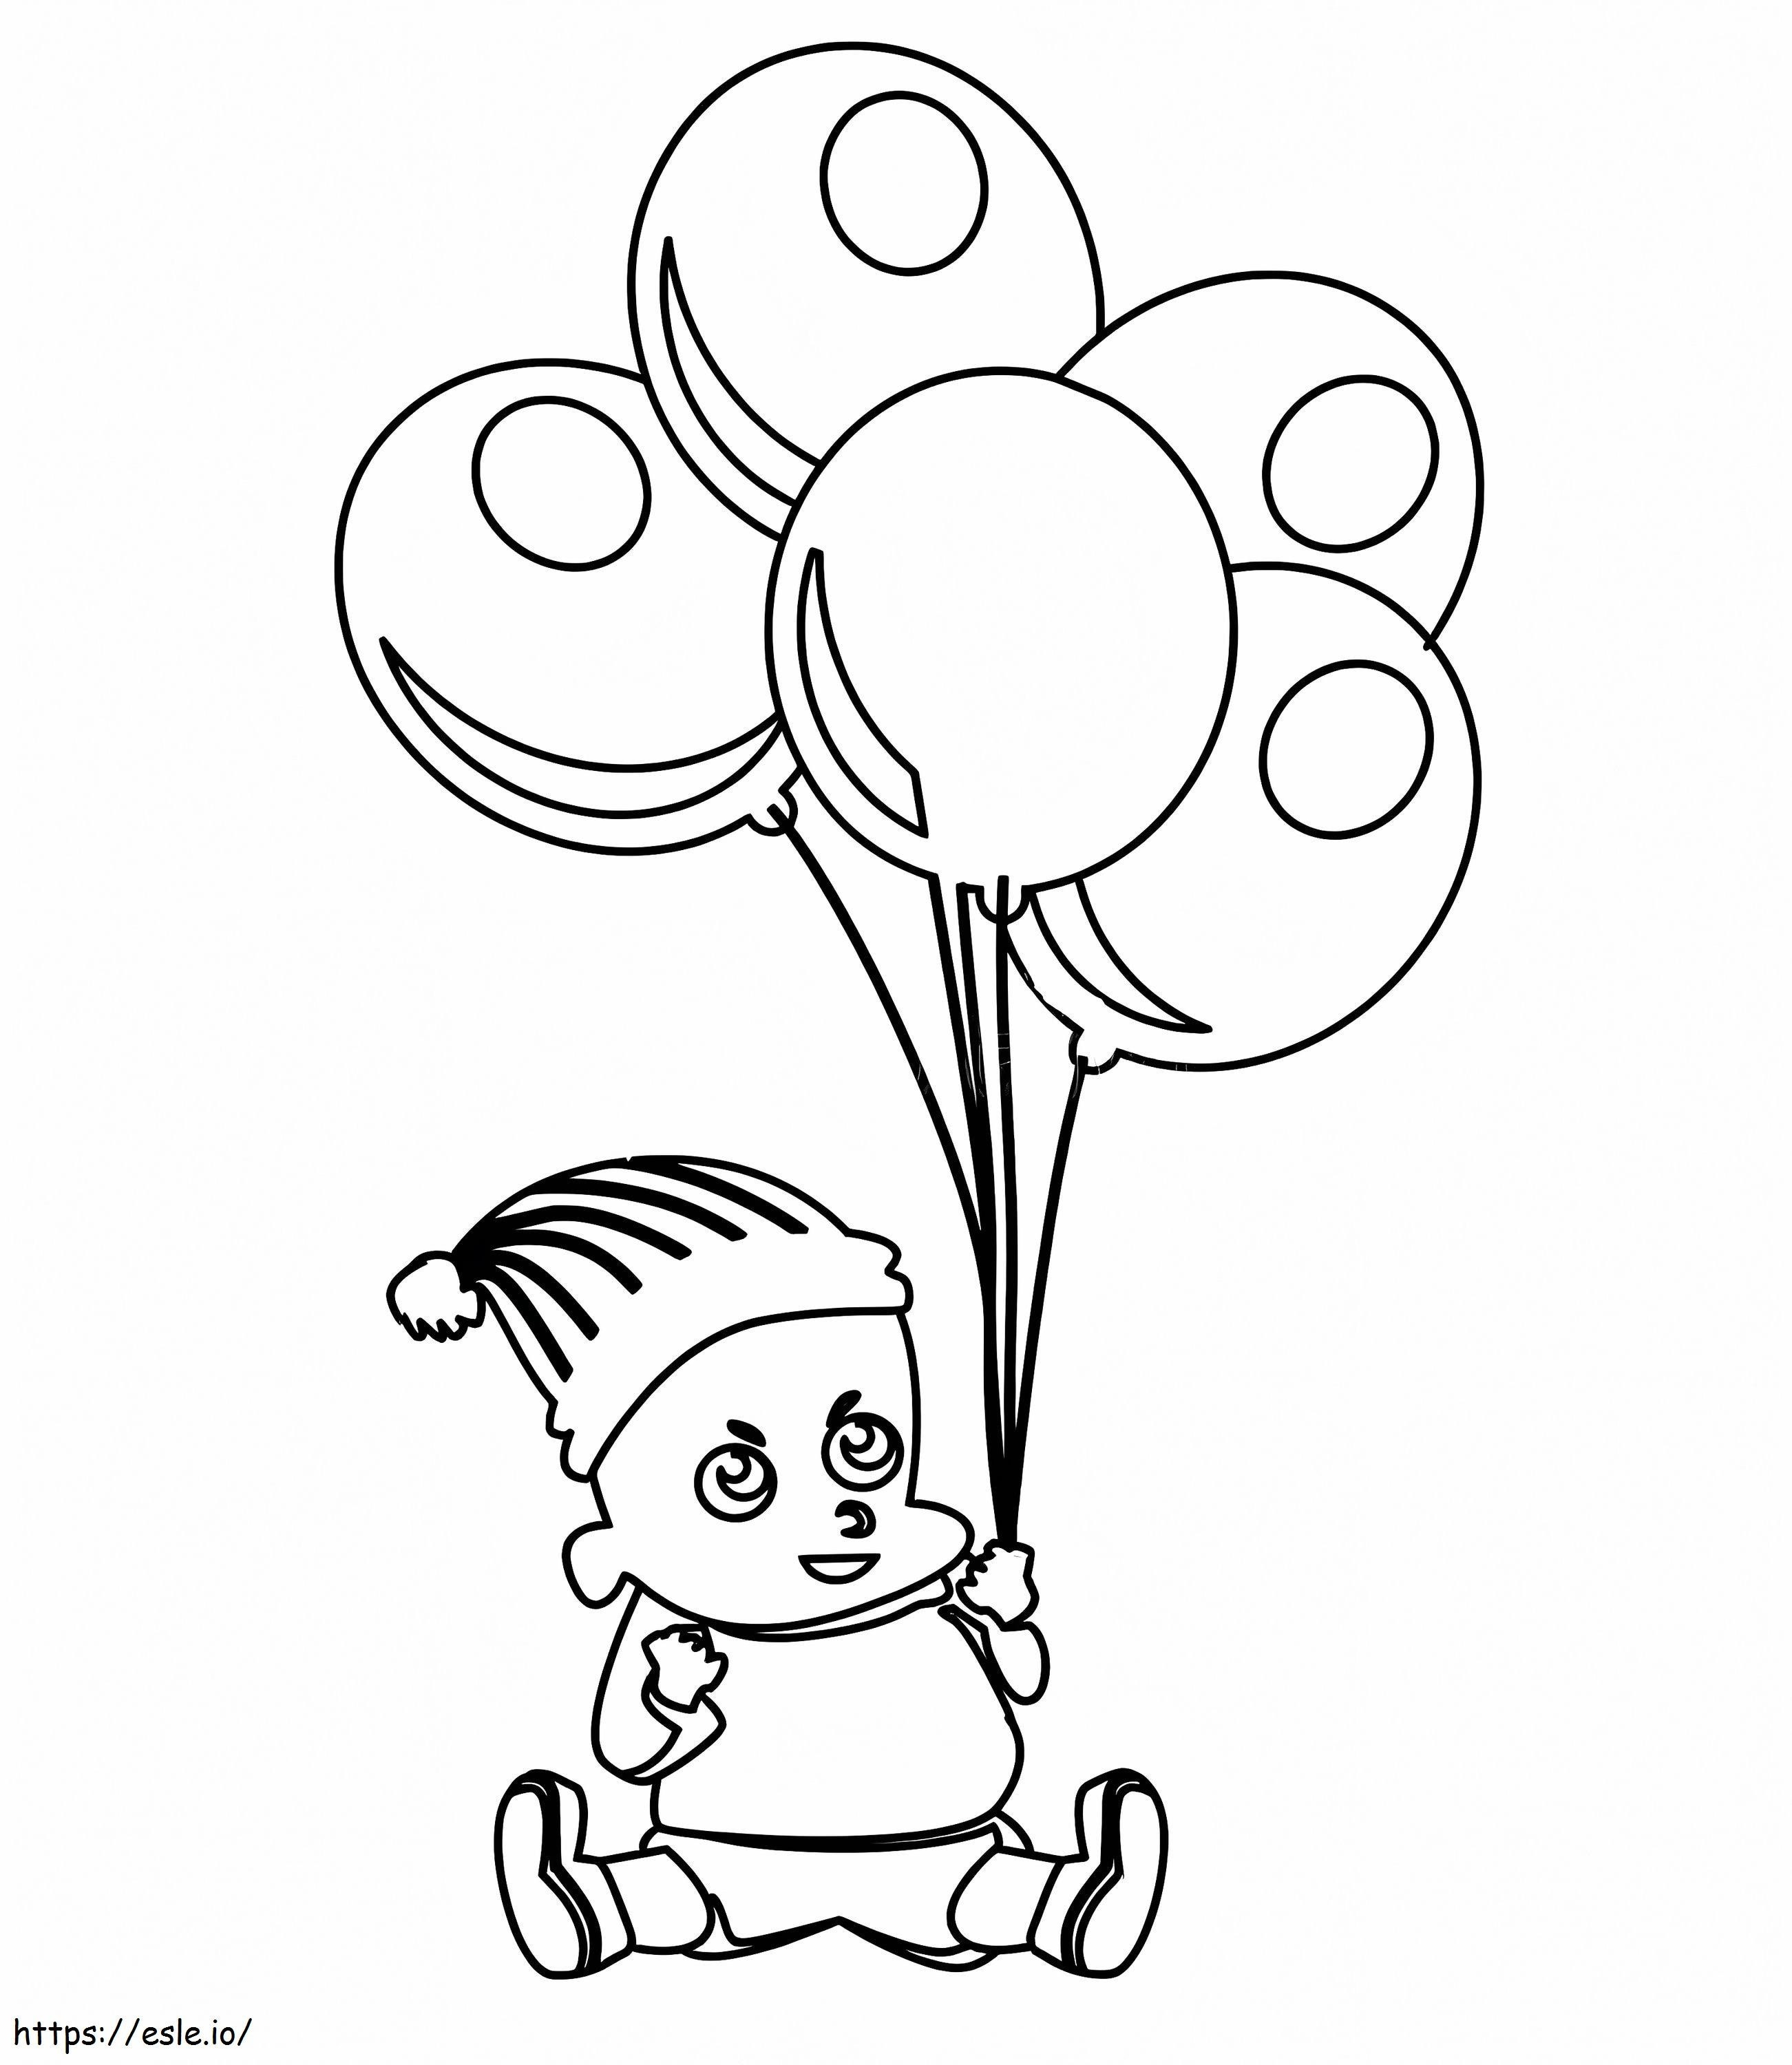 Süßes Baby mit Luftballons ausmalbilder